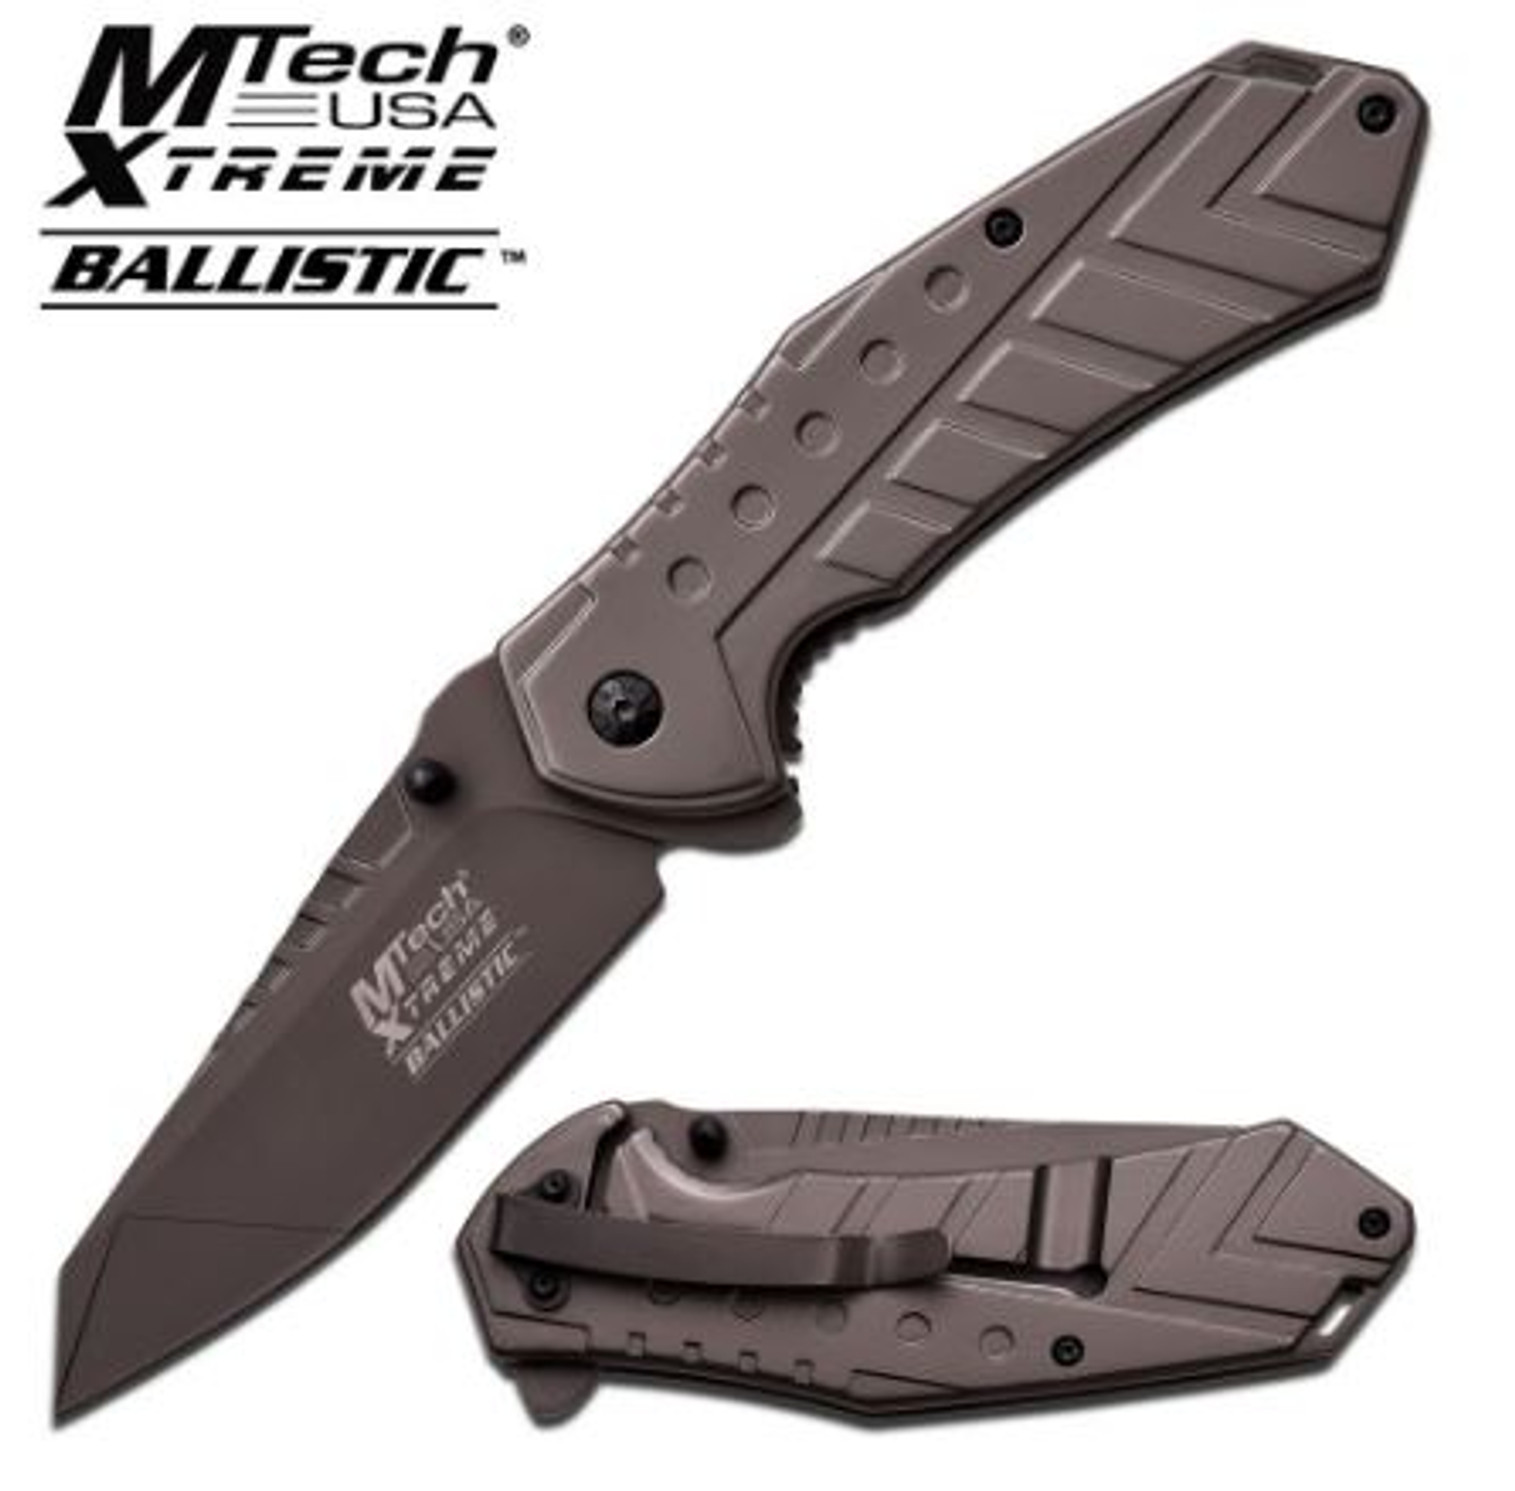 Mtech Xtreme MXA837GY Folding Knife Assisted Opening